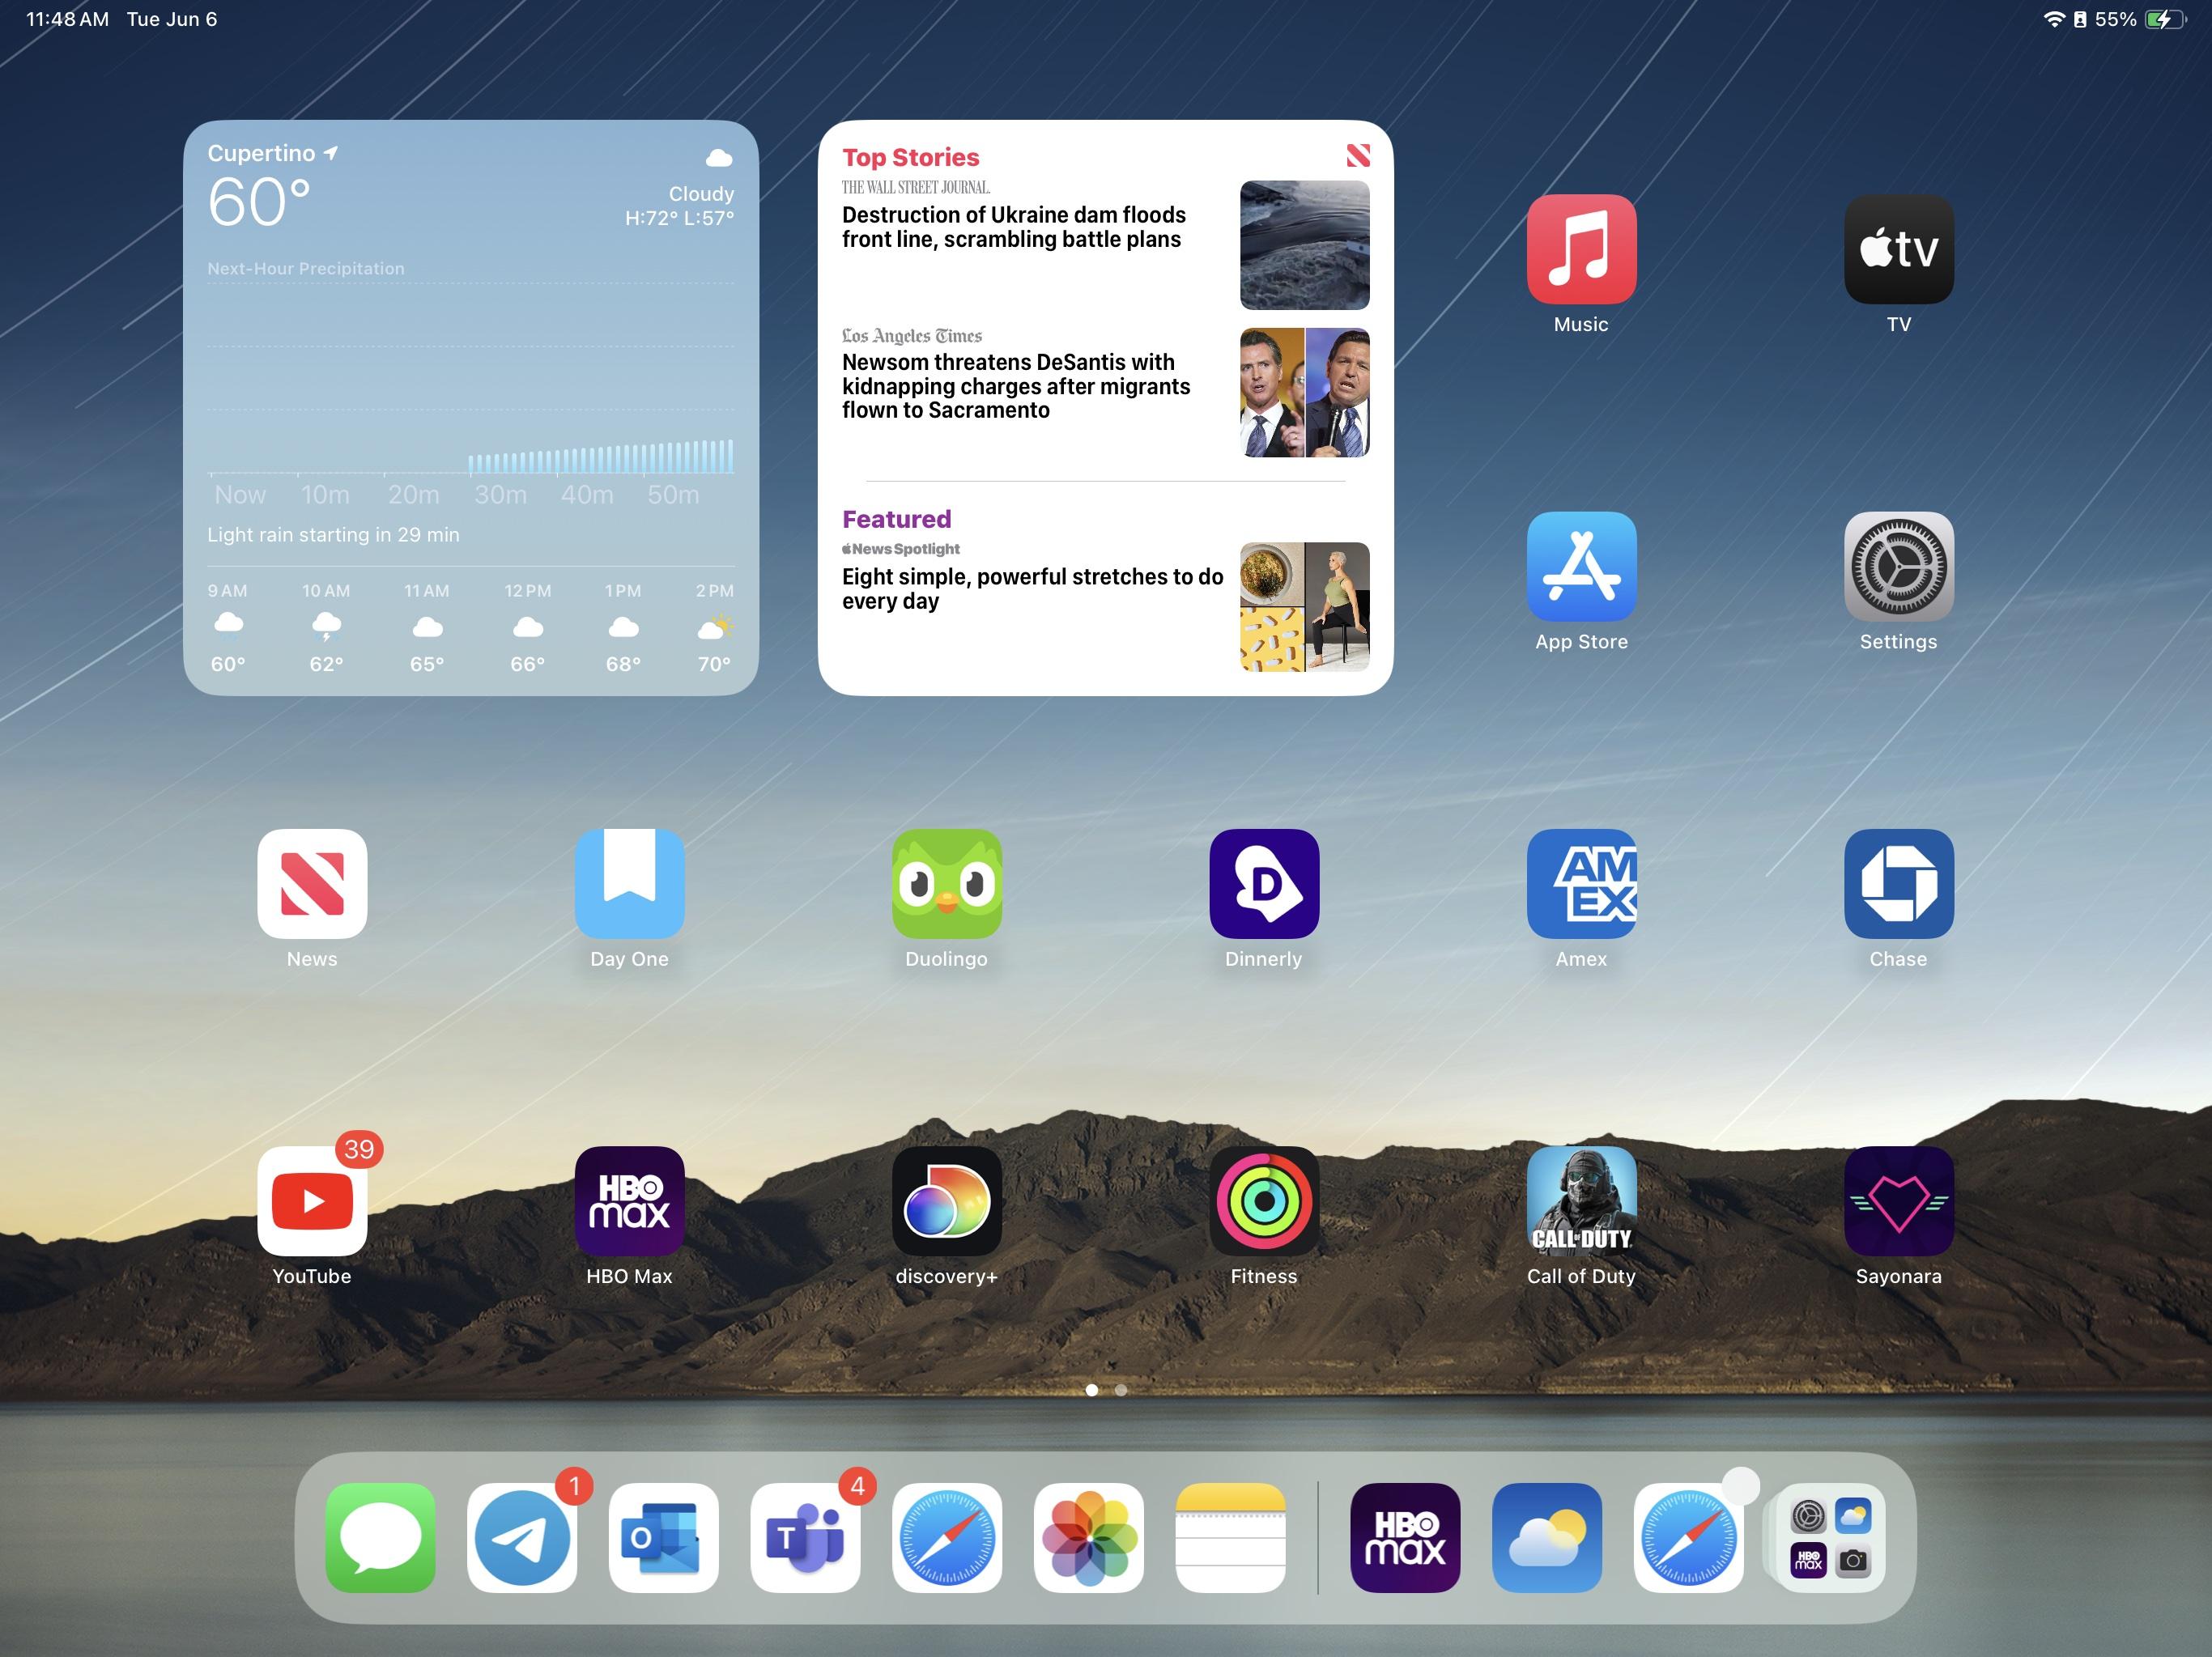 iPadOS 17 has a hidden surprise for fans of the original iPad